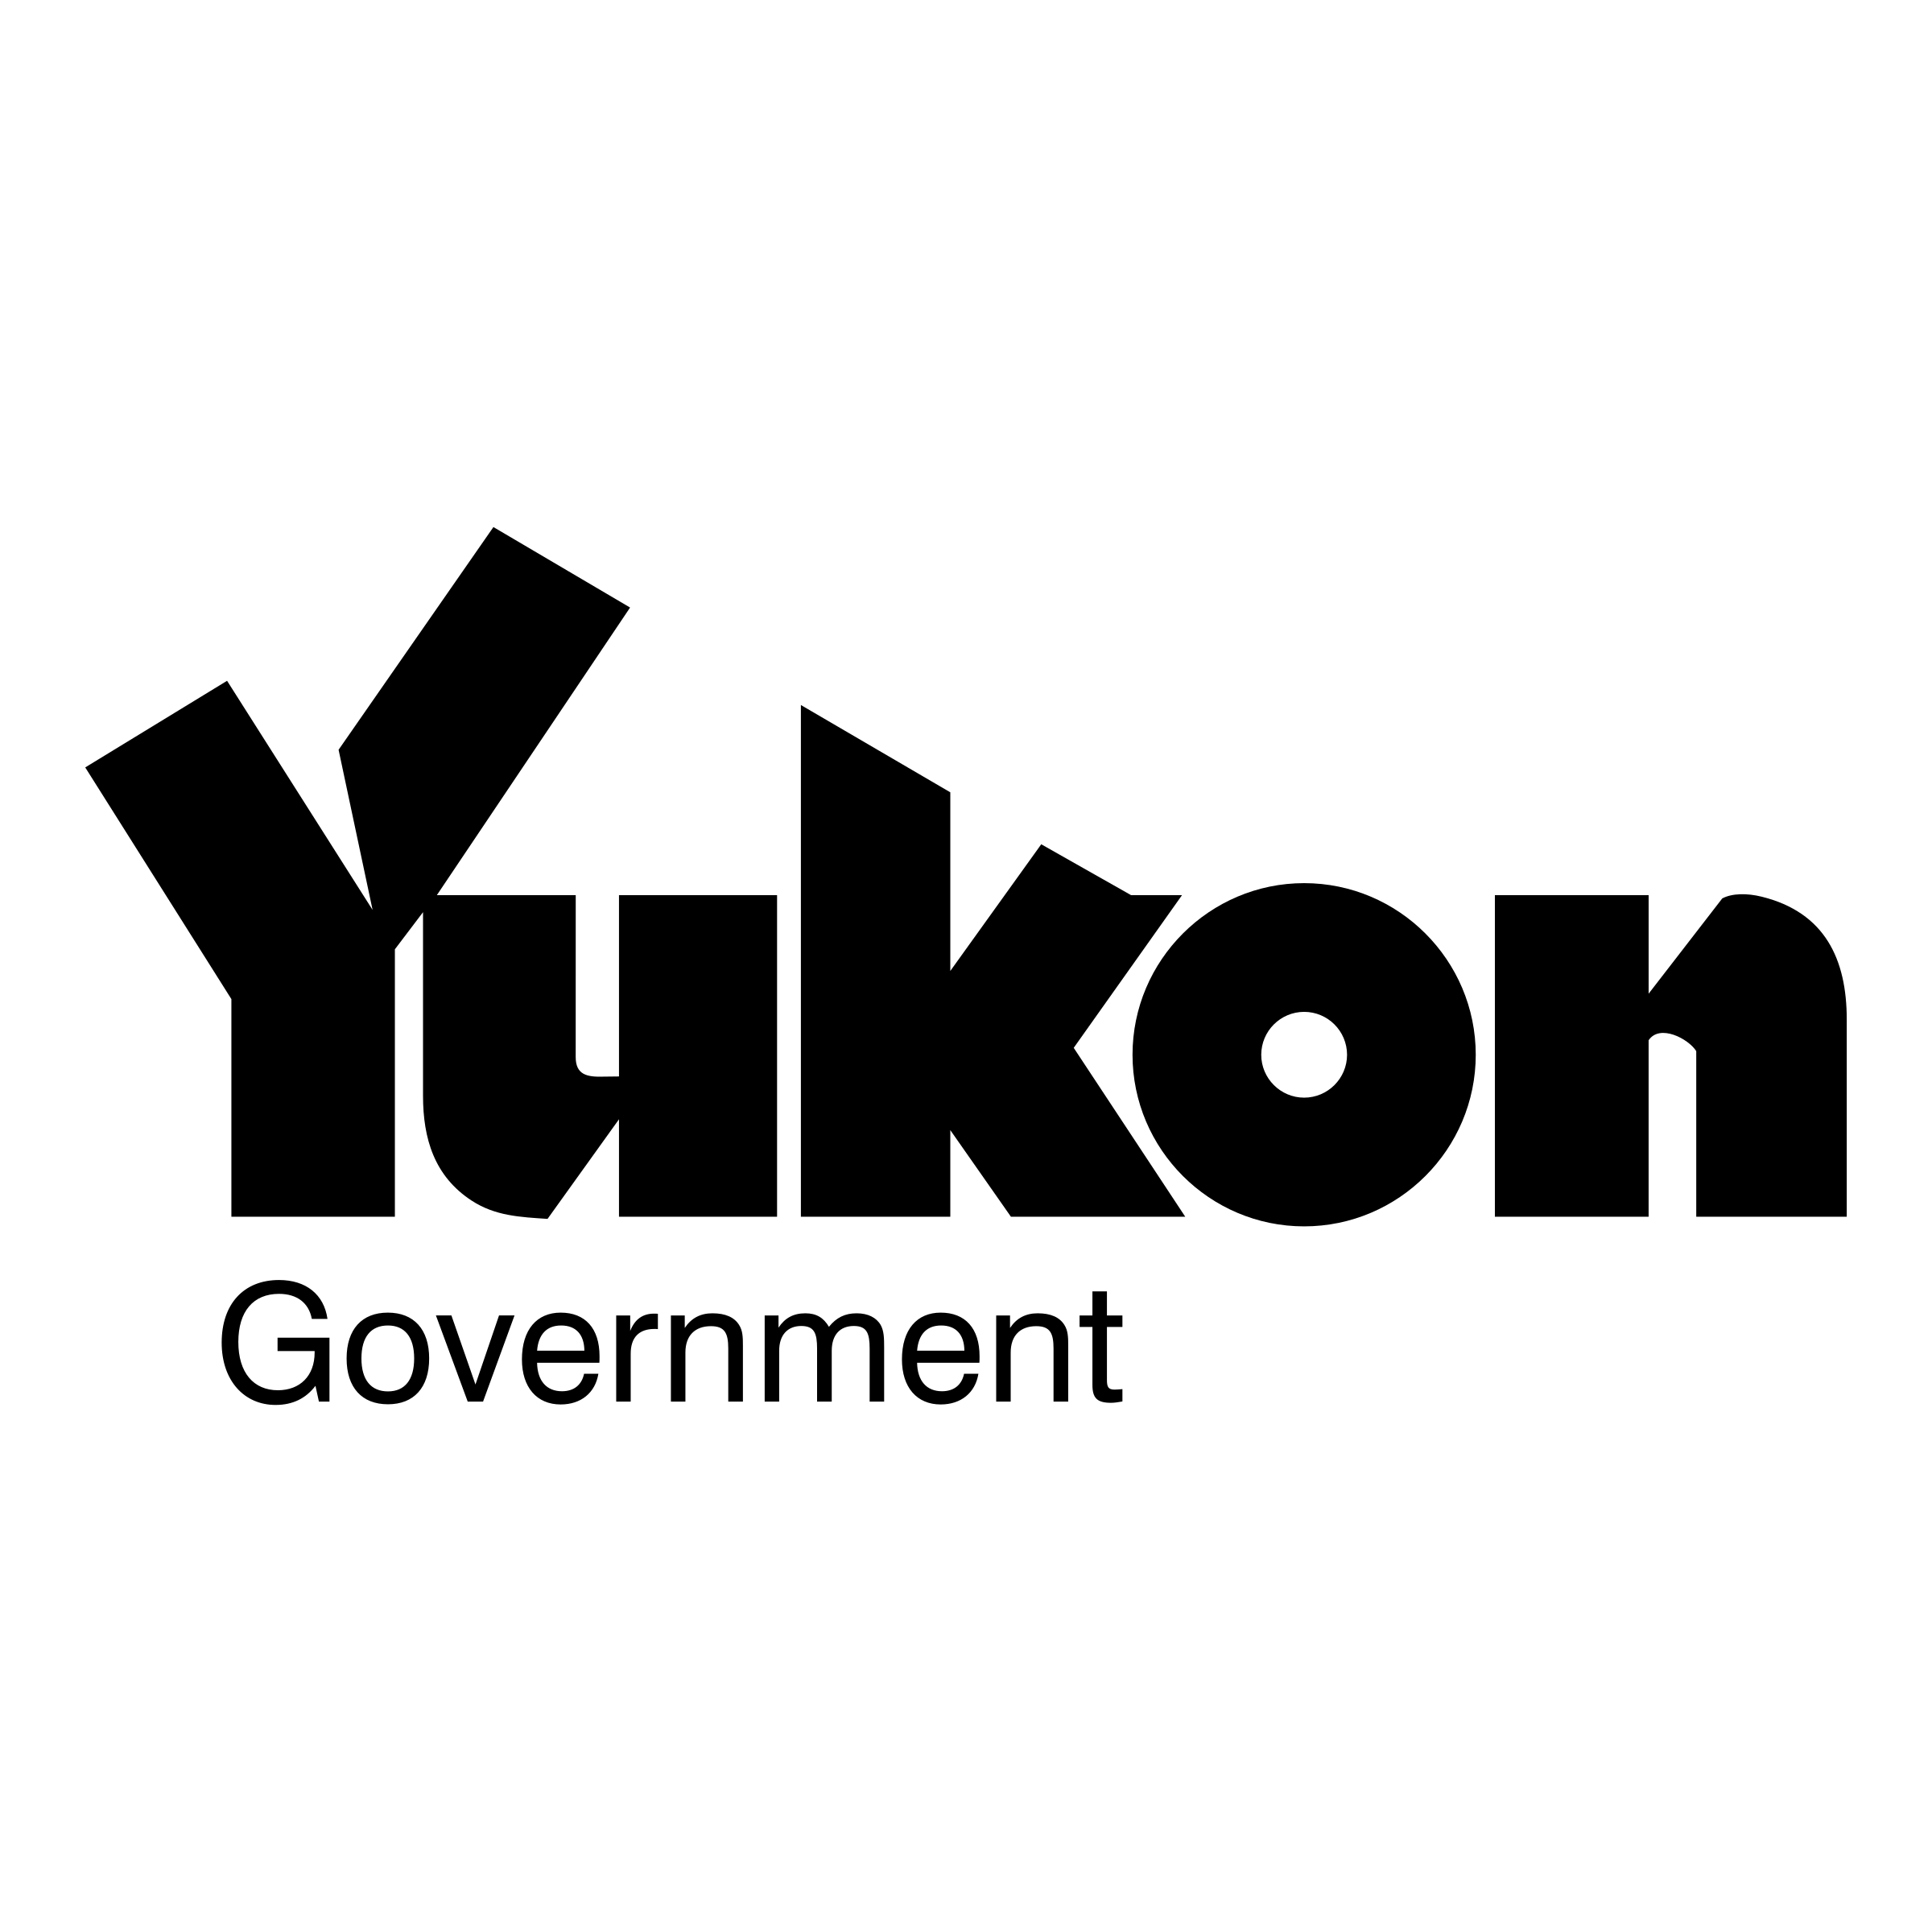 Yukon Logo - Yukon Government Logo PNG Transparent & SVG Vector